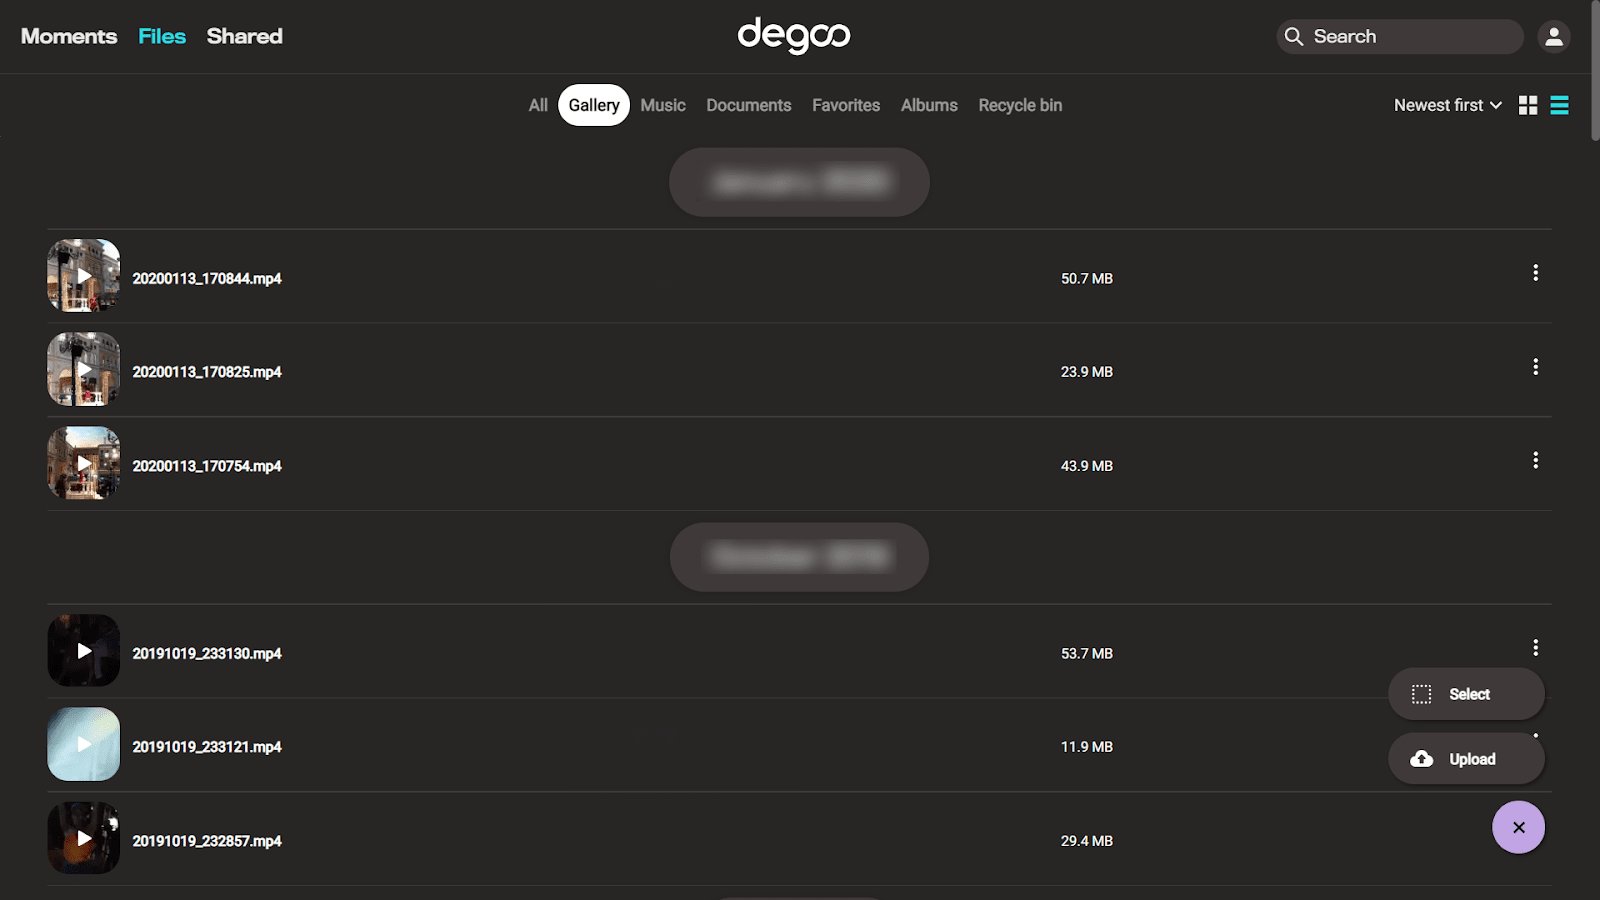 degoo-web-app